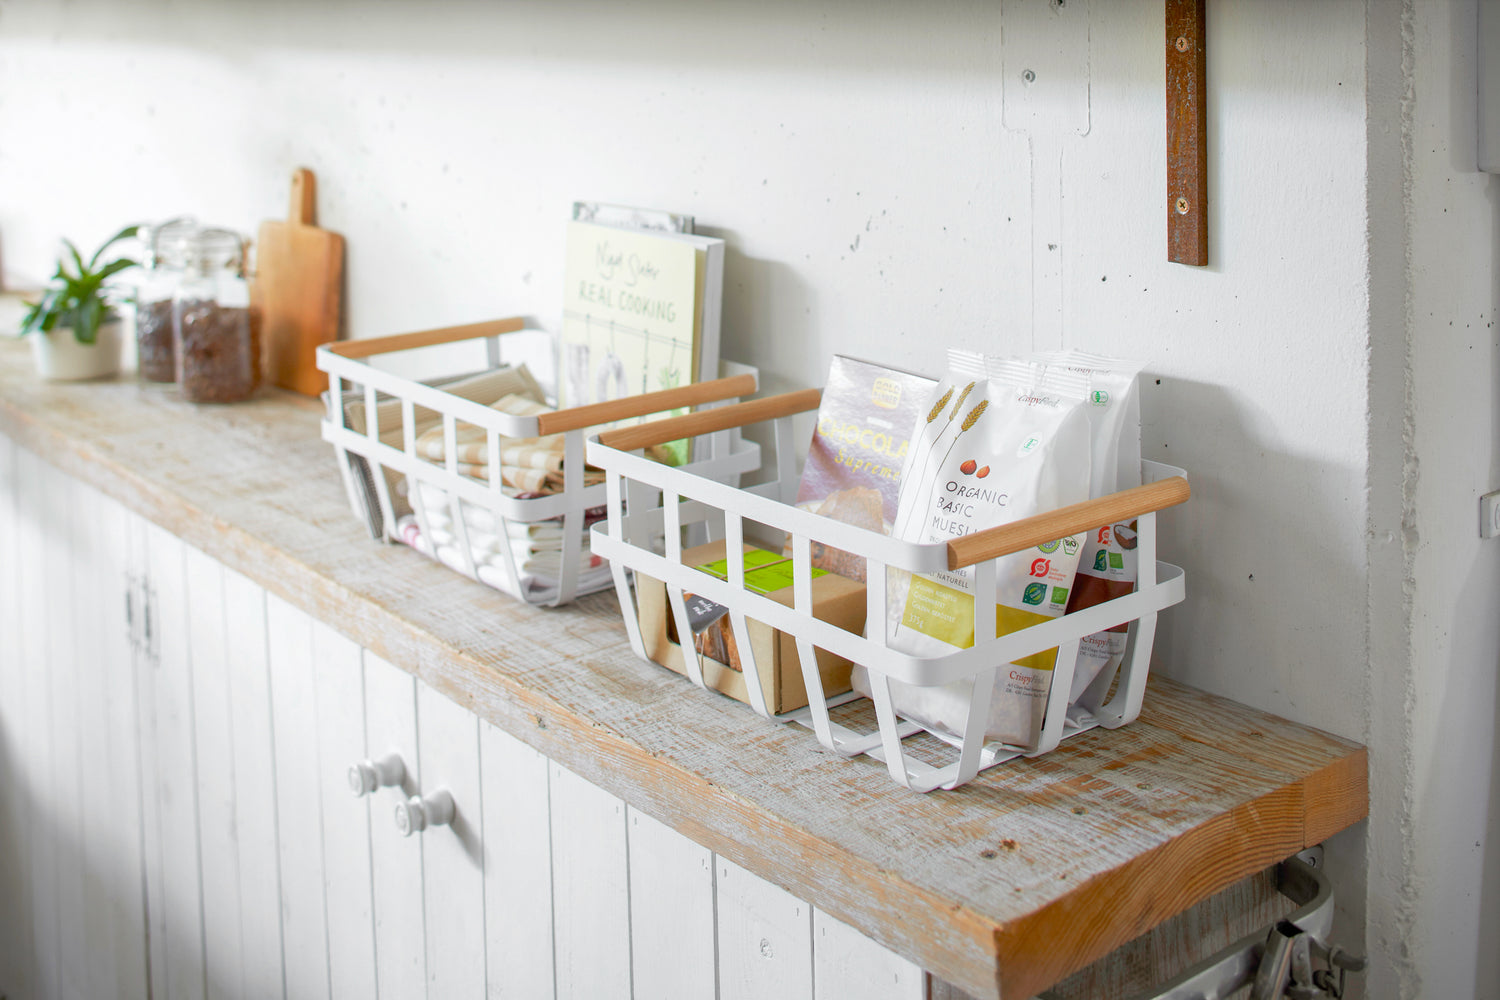 View 10 - Storage Basket containing food items on shelf by Yamazaki Home.